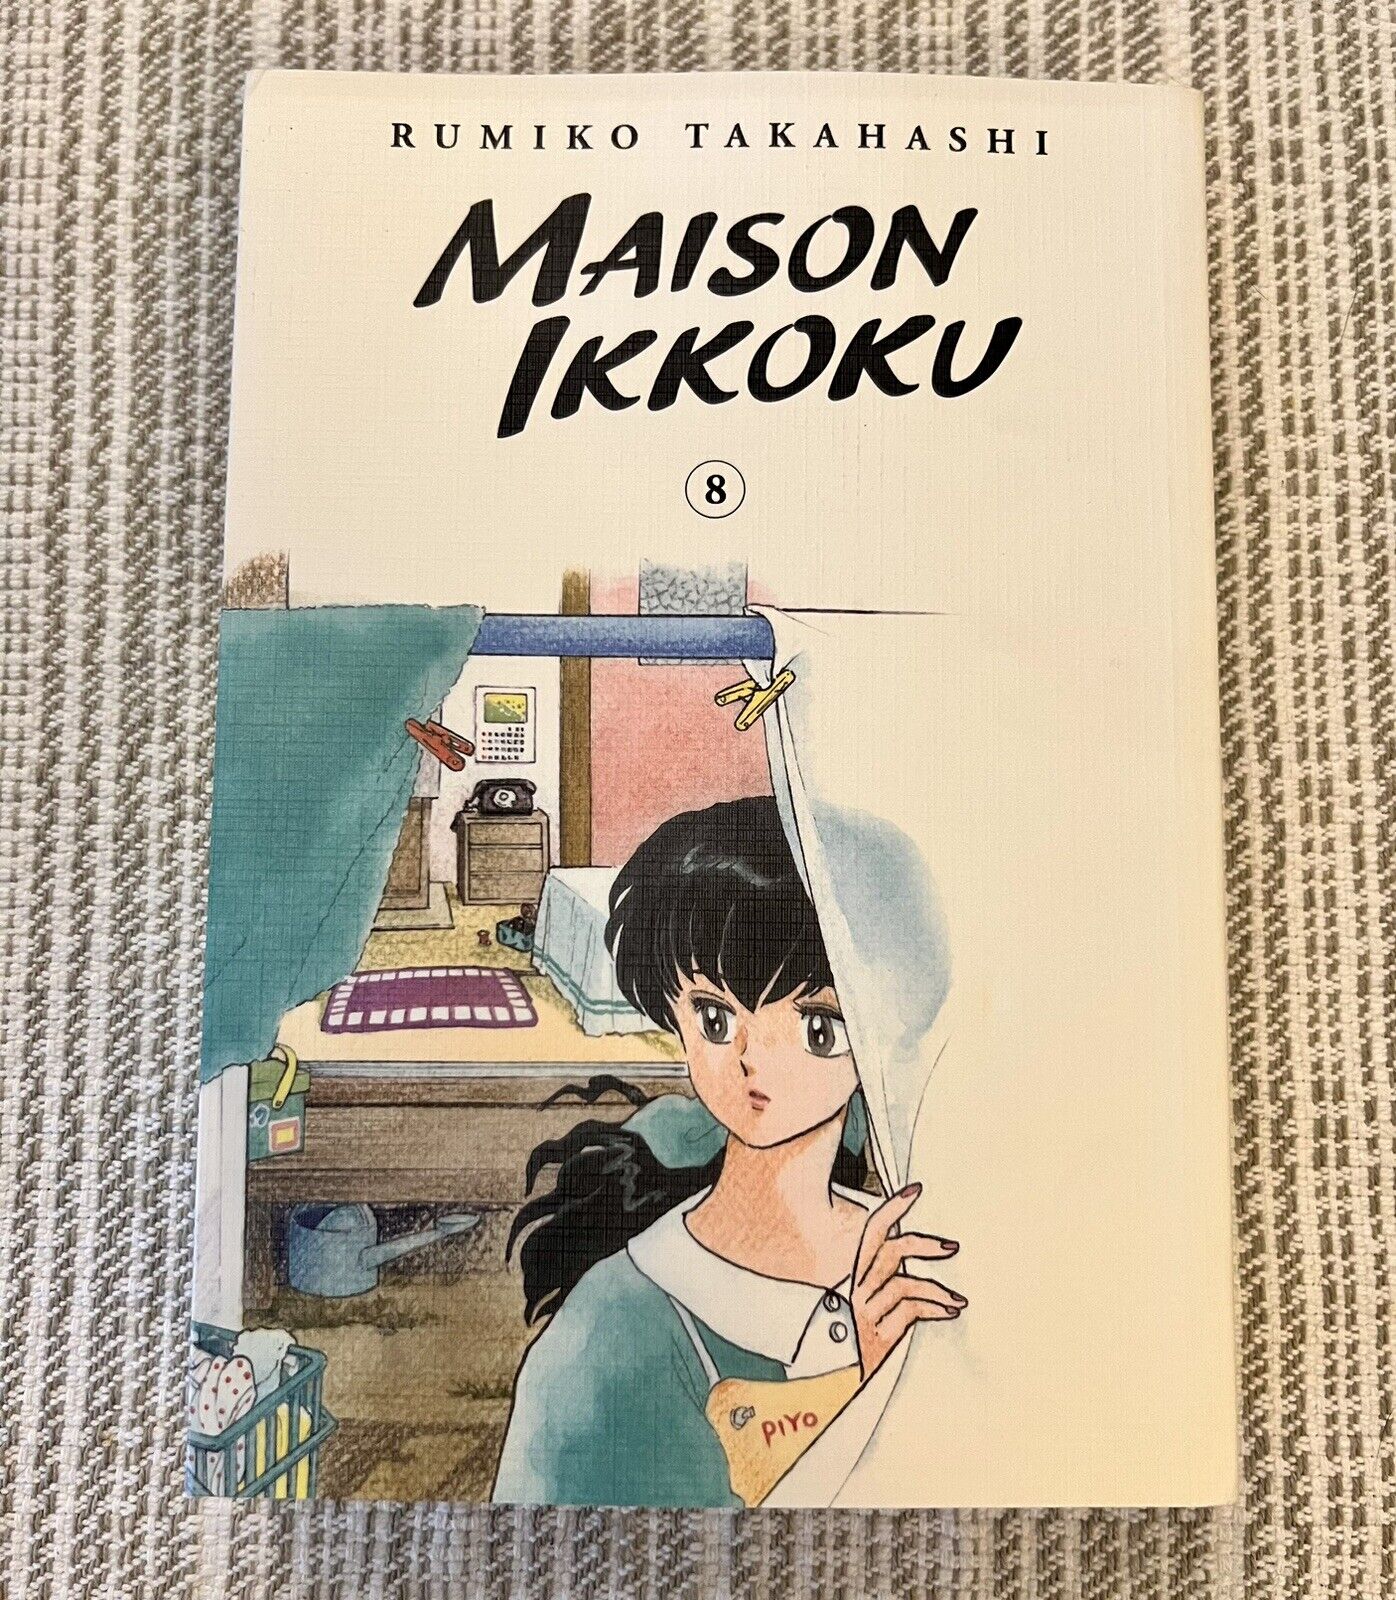 MAISON IKKOKU #8 Rumiko Takahashi, MANGA